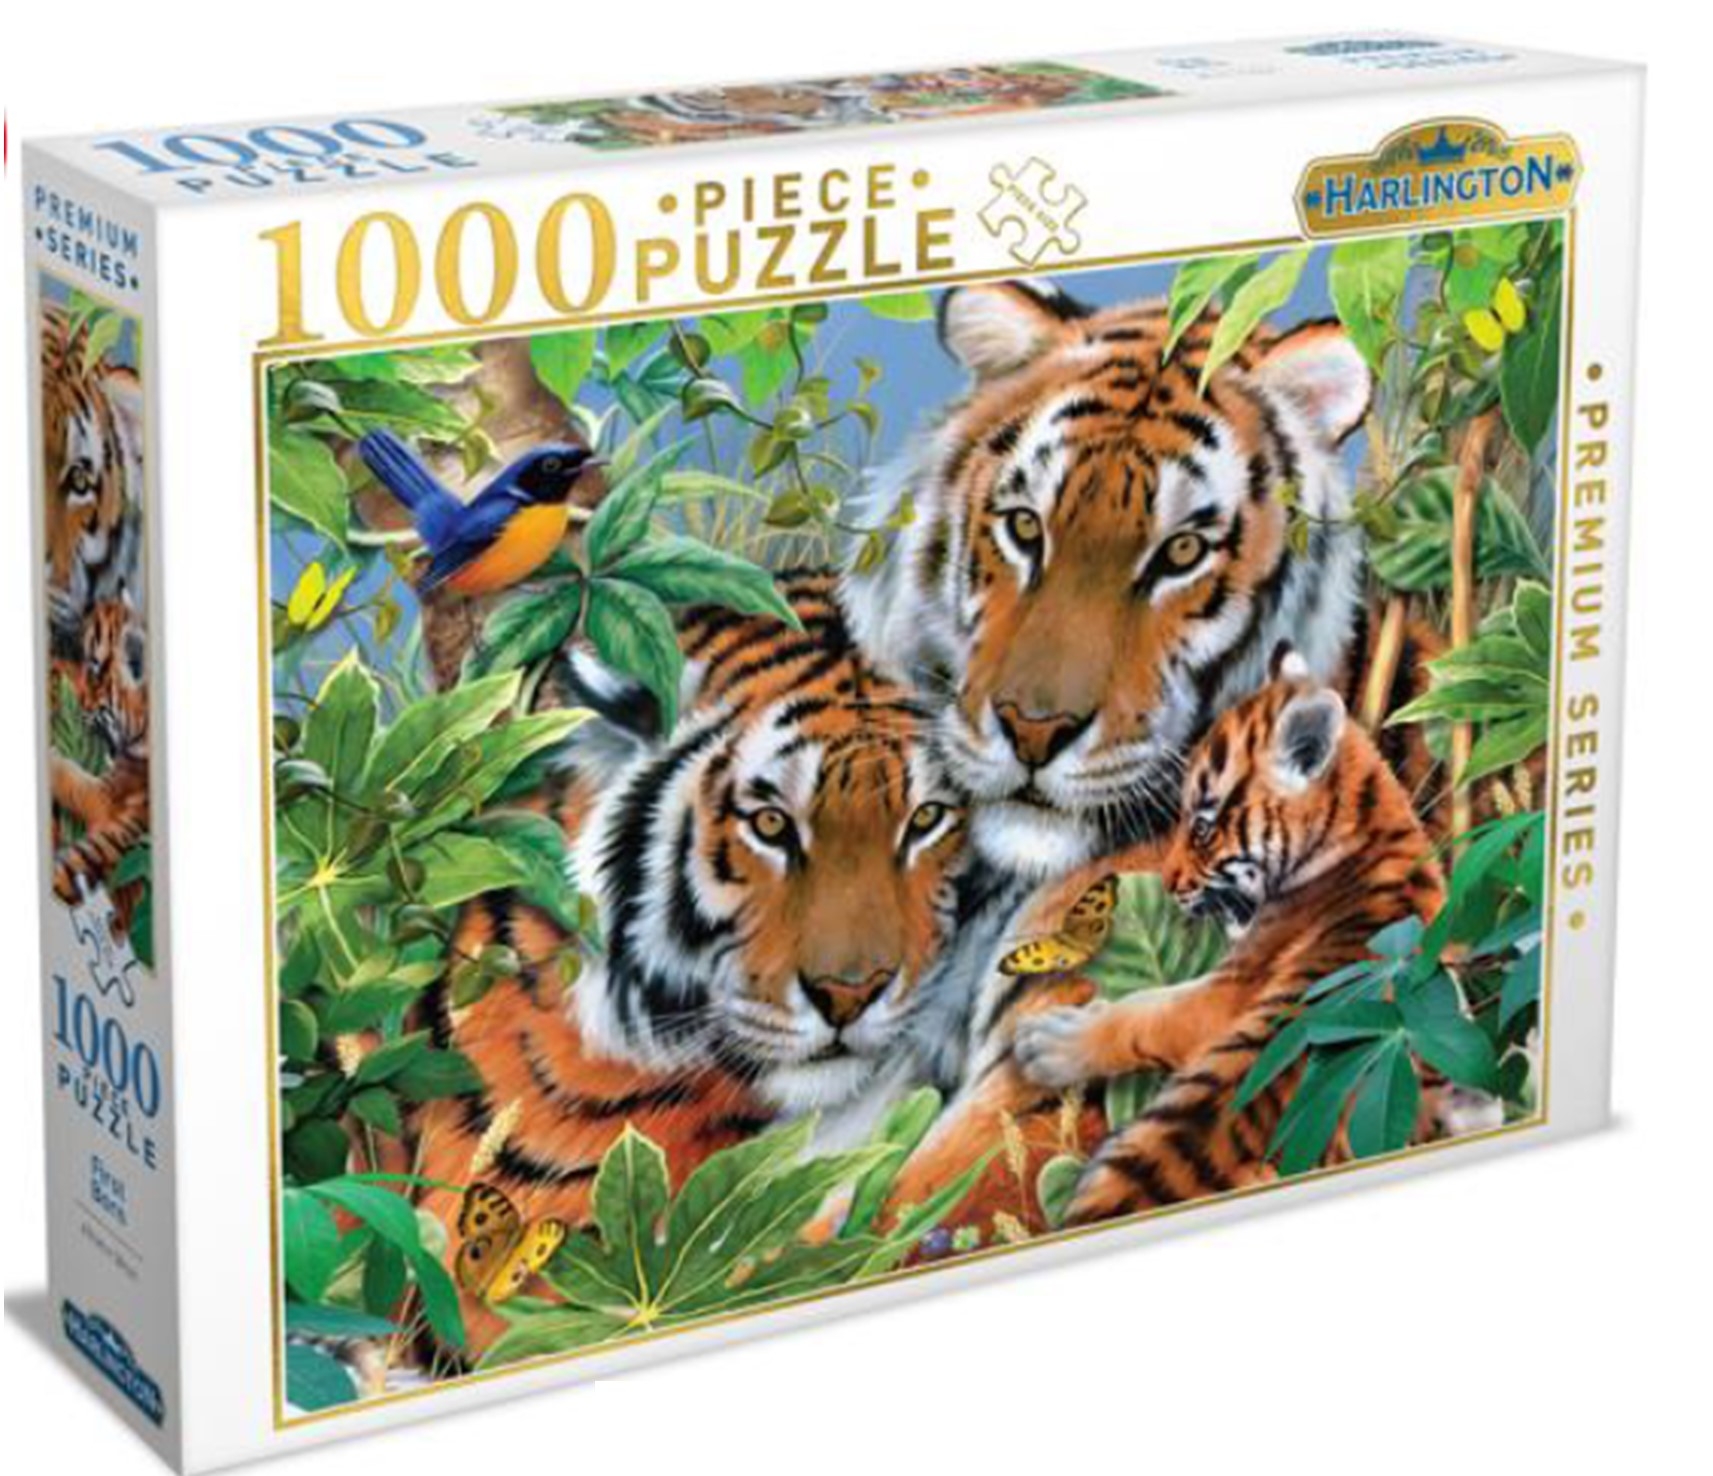 Harlington - 1000 Piece - First Born - Jigsaws-1000 : The Games Shop ...